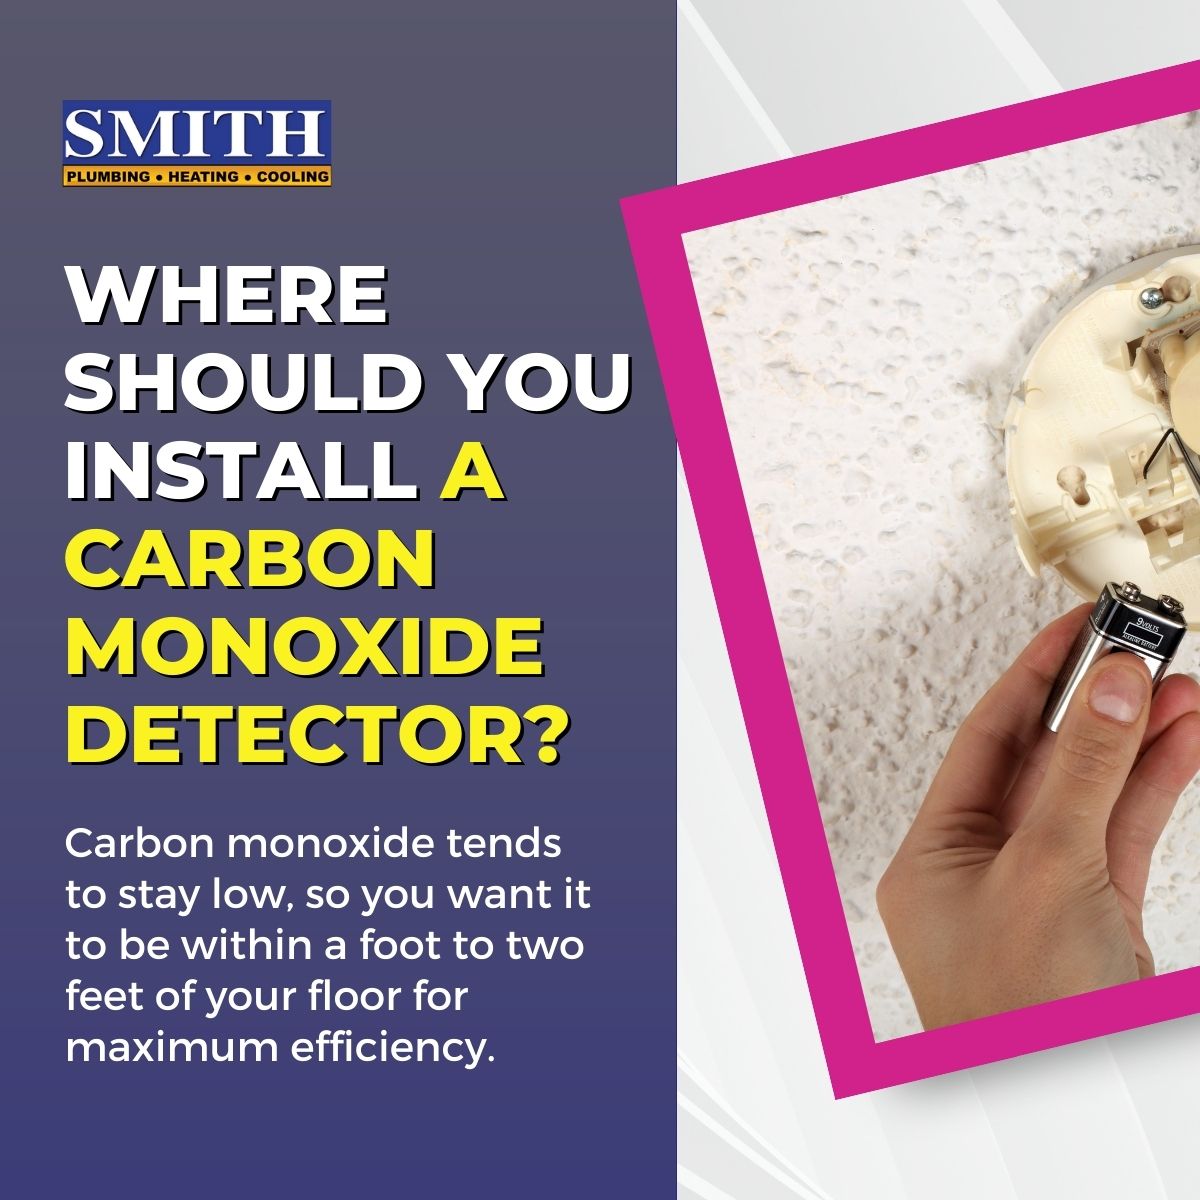 Where should you install a carbon monoxide detector?